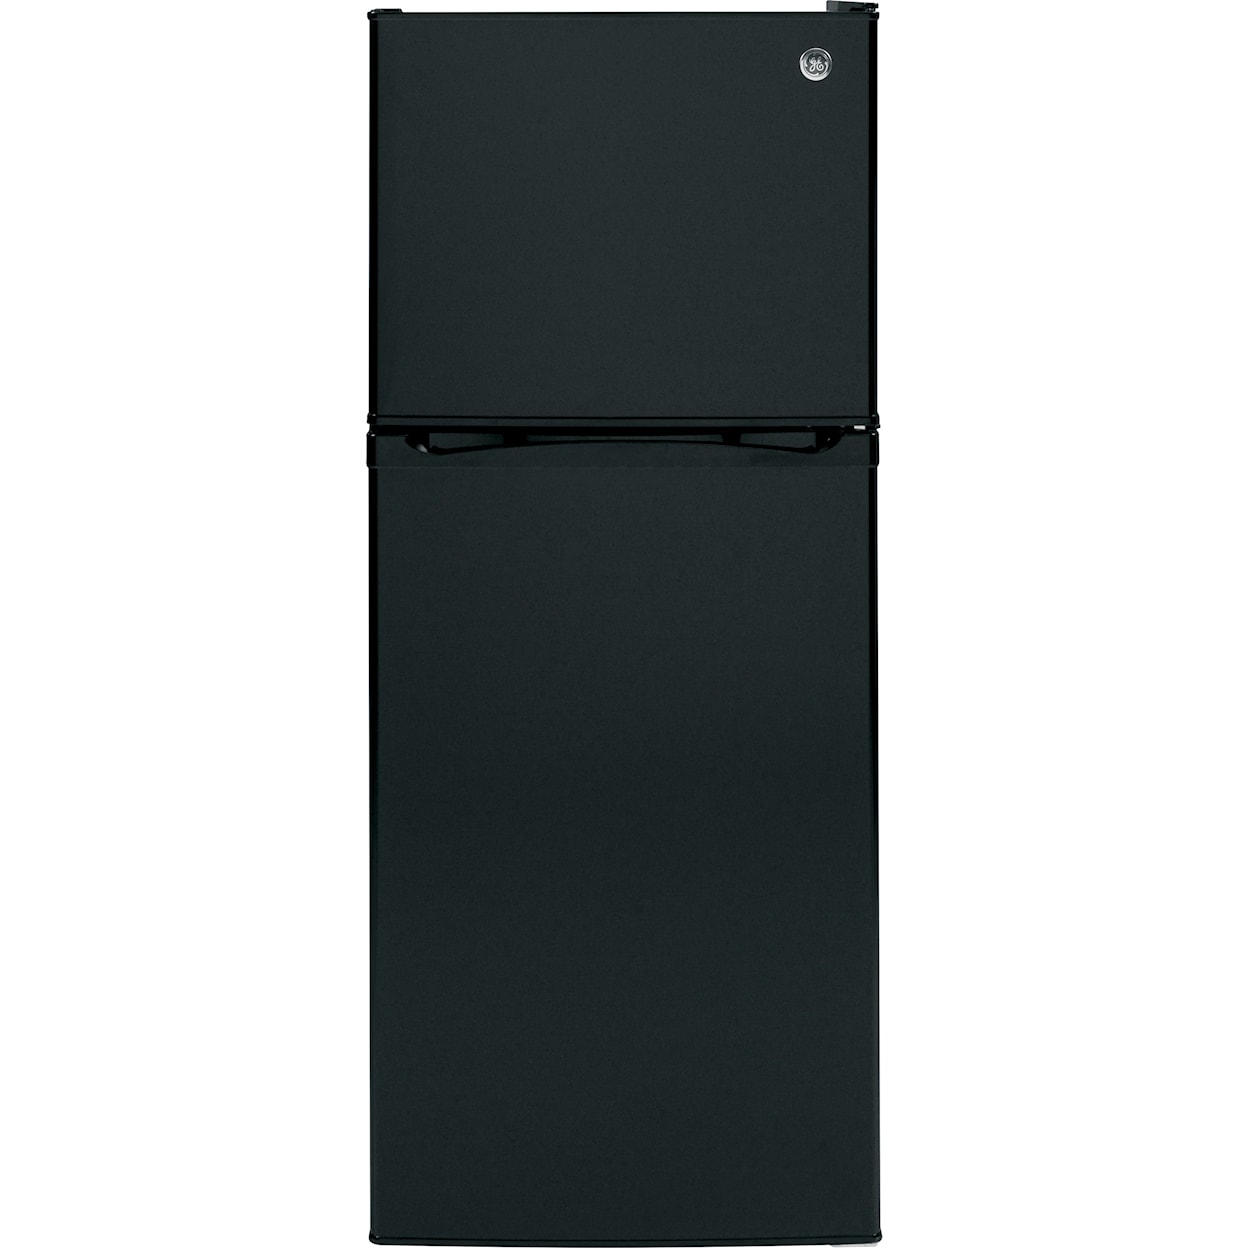 GE Appliances GE Top-Freezer Refrigerators ENERGY STAR® Top-Freezer Refrigerator